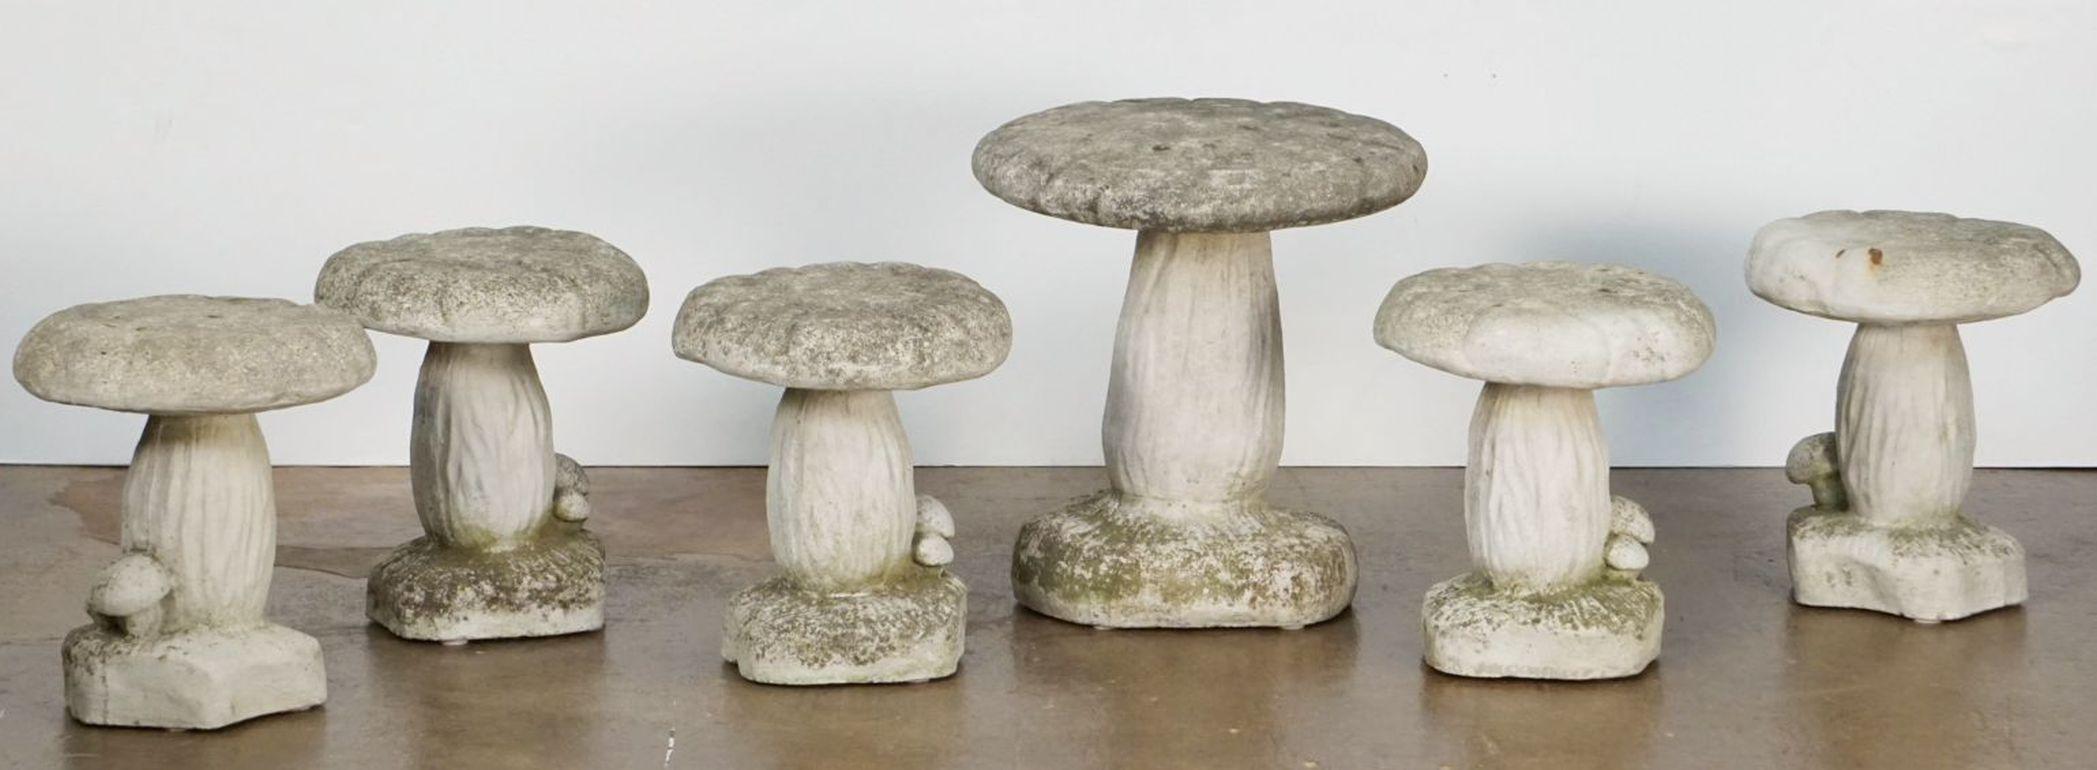 Set of Six Garden Stone Mushrooms or Toadstool Sculptures from Belgium For Sale 12